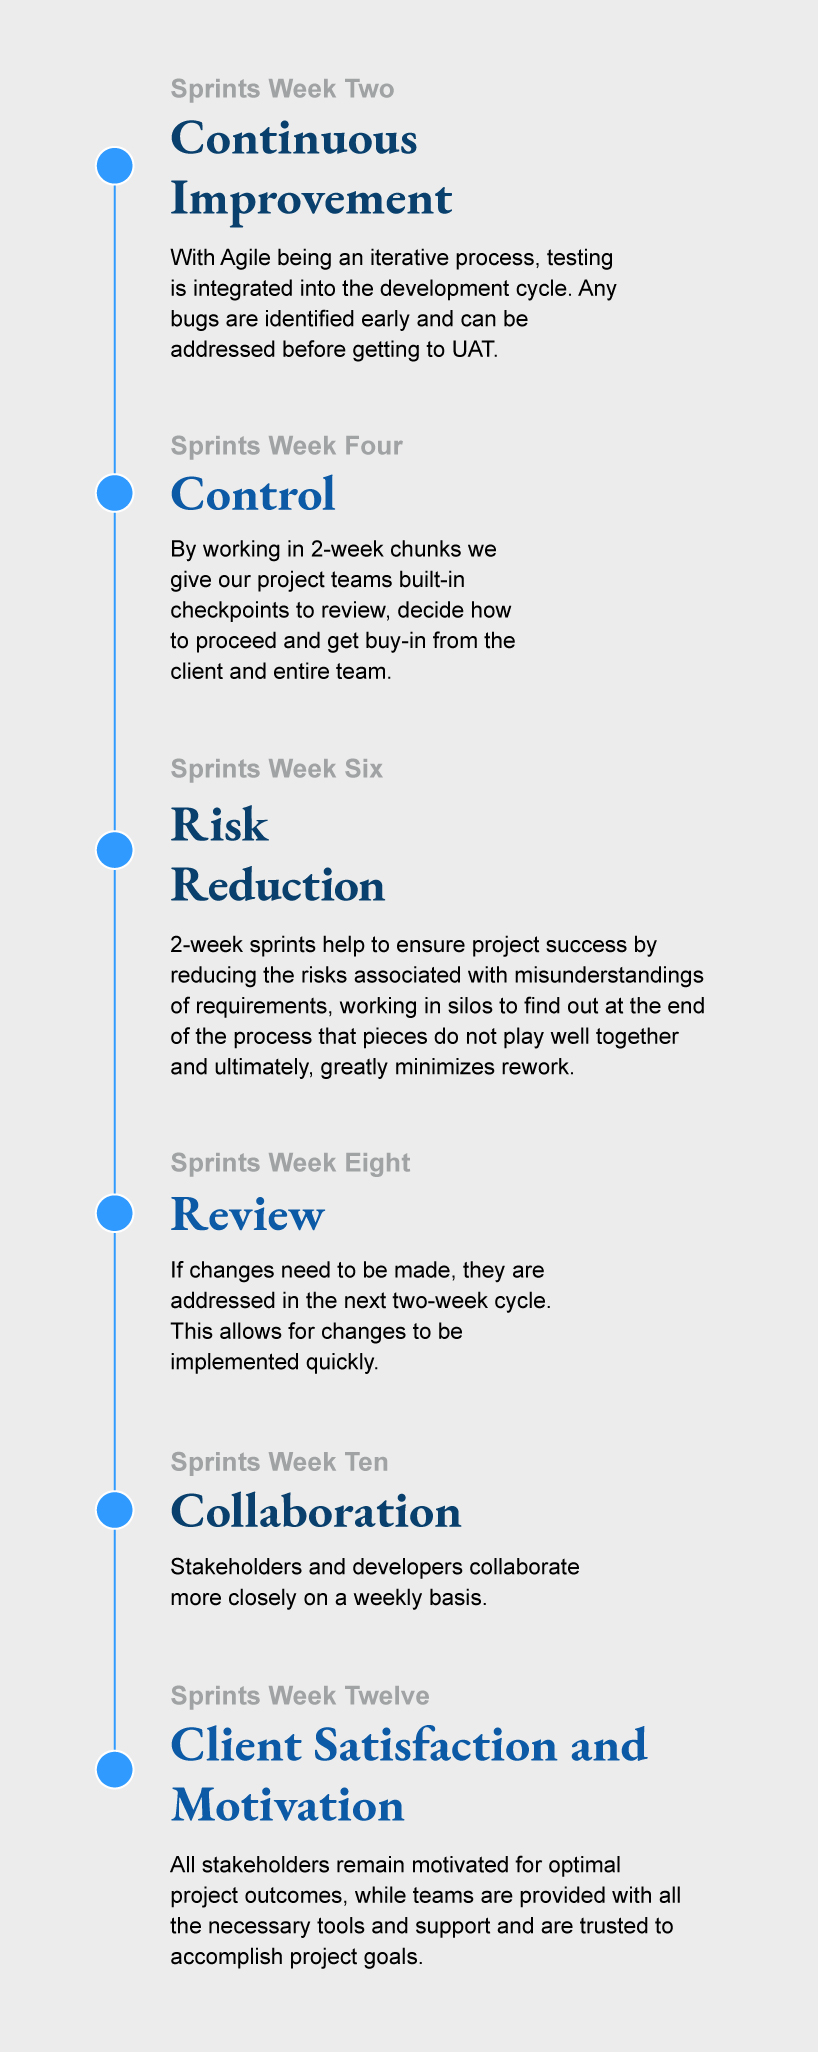 Project Management two-week sprint advantages, Continuous Improvement, Control, Risk Reduction, Review, Collaboration, Client Satisfaction and Motivation